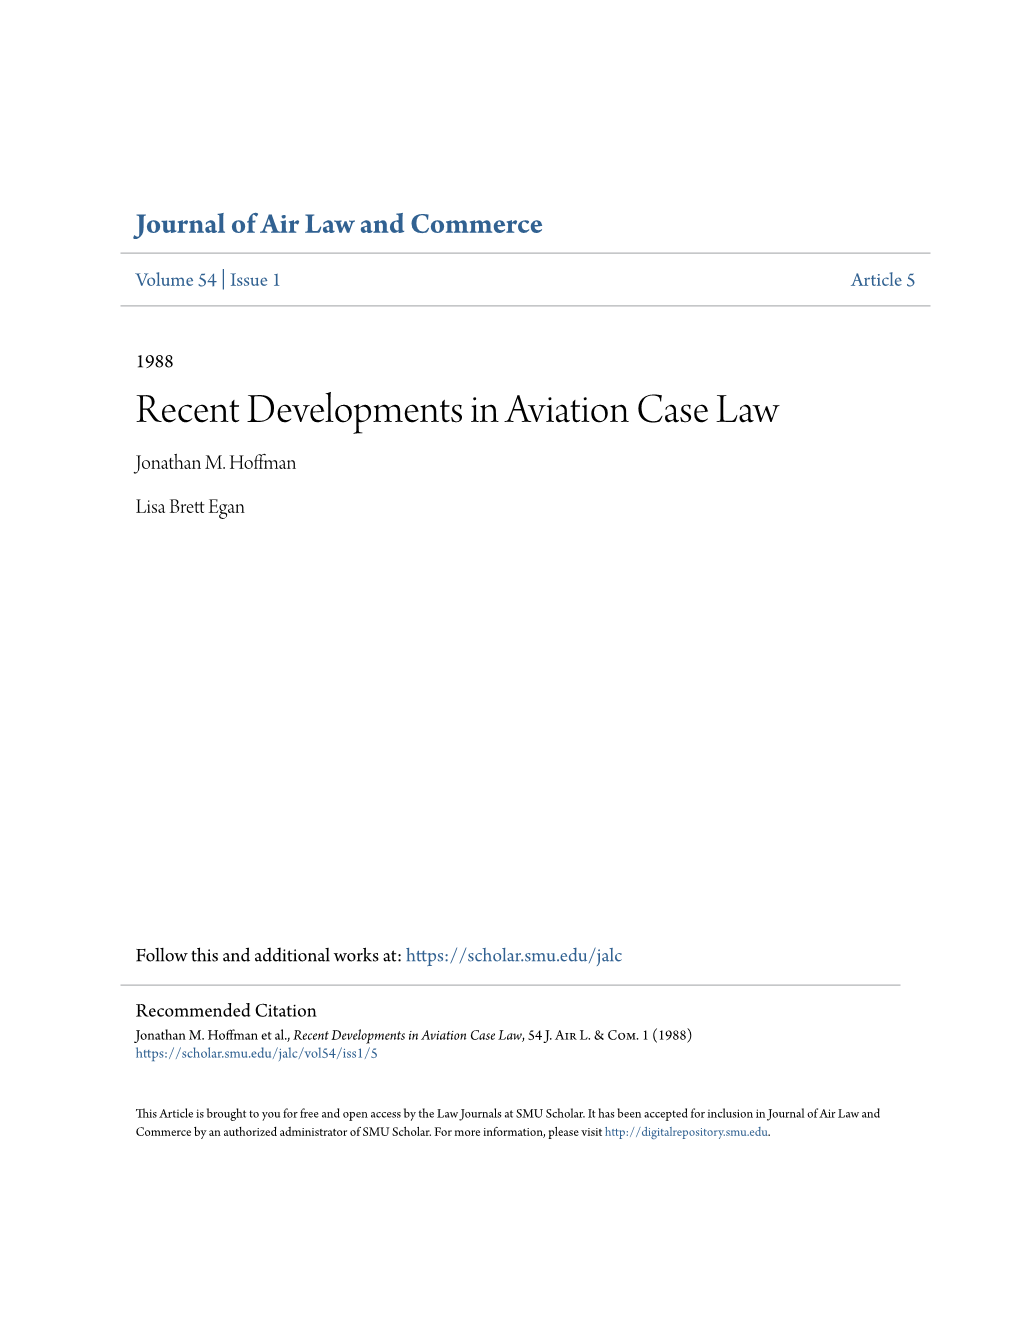 Recent Developments in Aviation Case Law Jonathan M